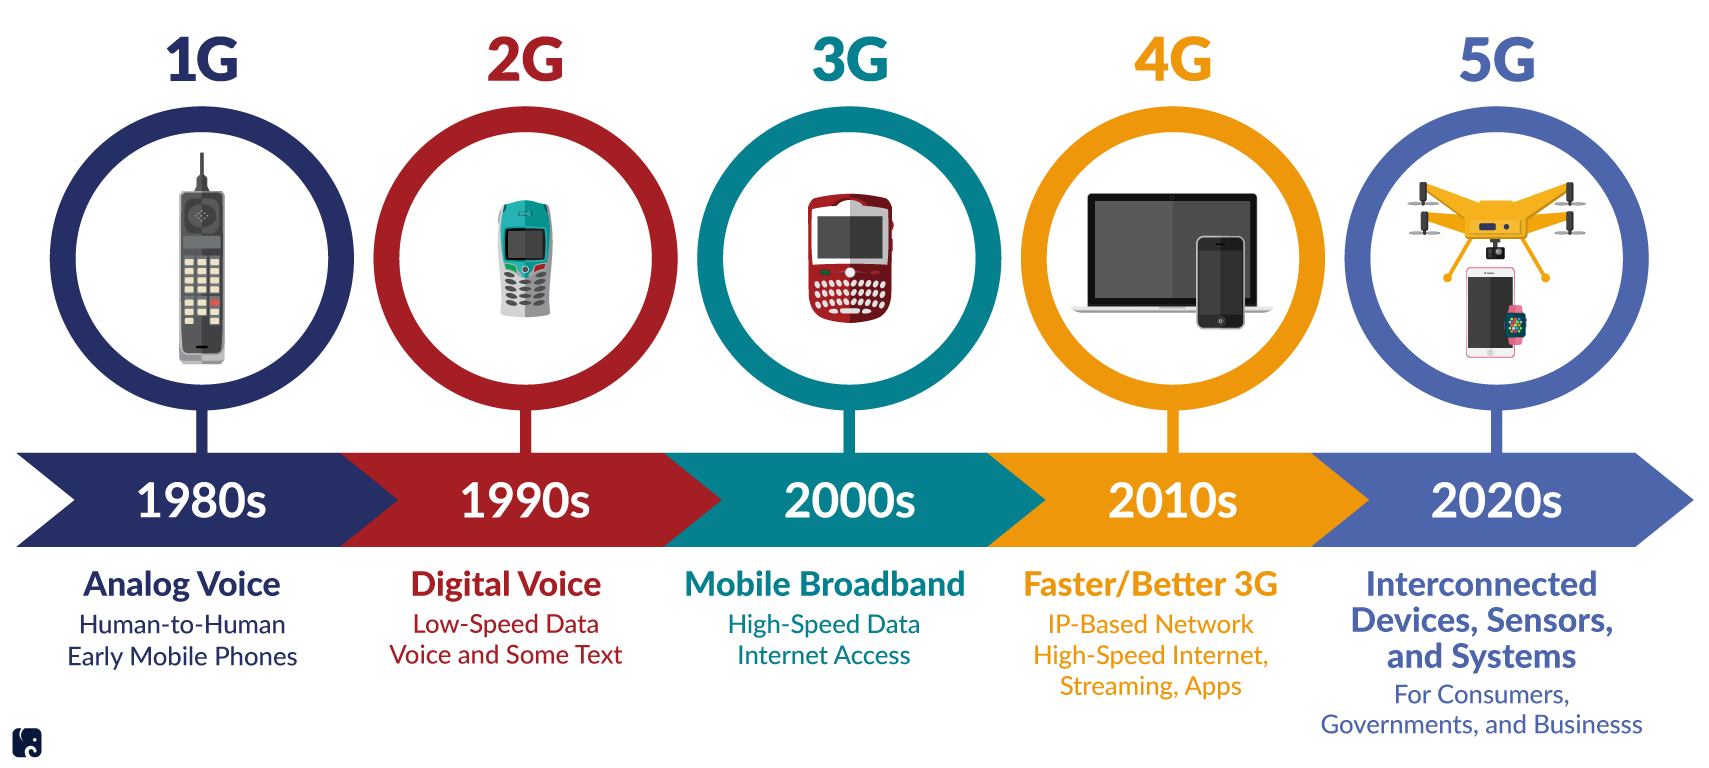 Pai 5g 5g. Технологии сотовой связи 2g 3g 4g. Поколения сотовой связи 2g 3g и 4g. 4g стандарты сотовой сети. Сотовая связь 1g 2g 3g 4g 5g.